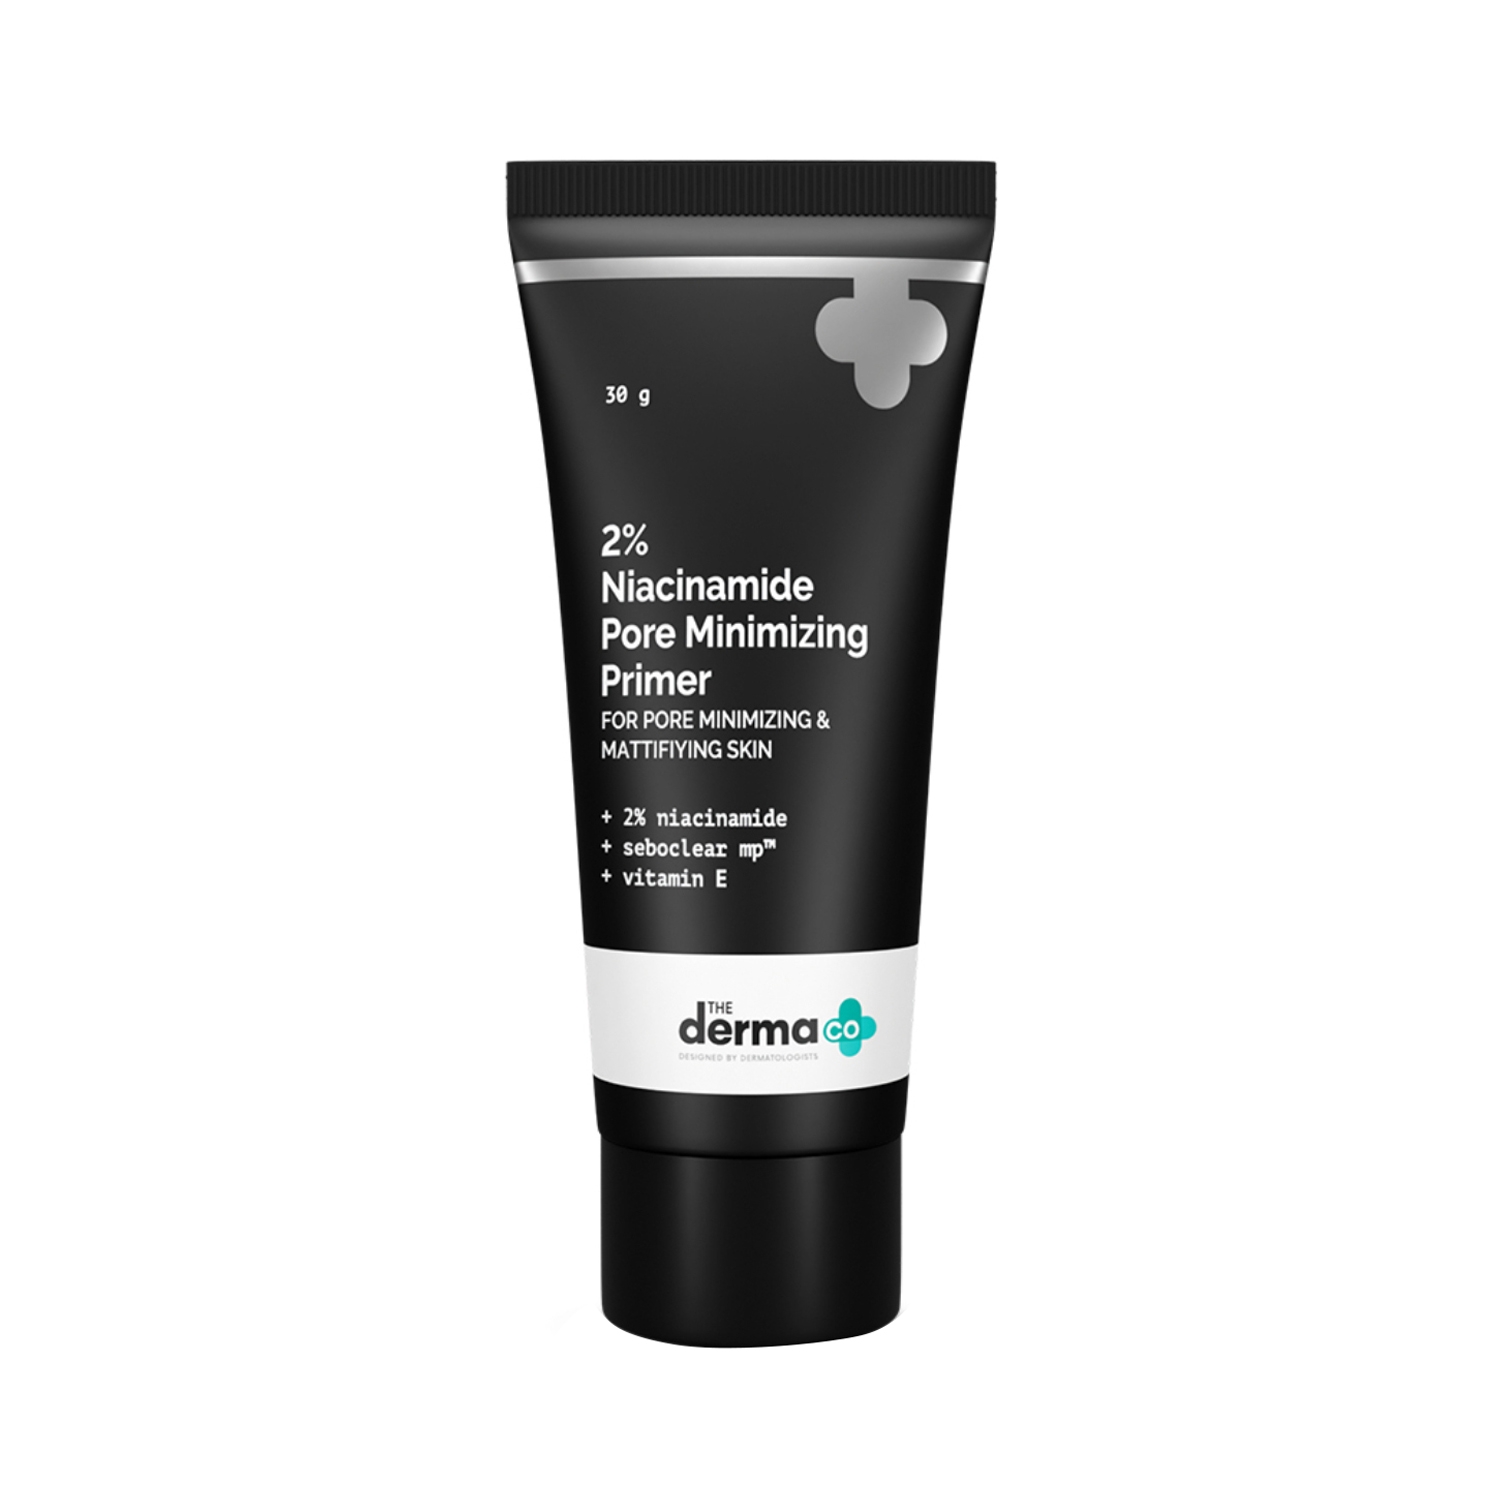 The Derma Co 2% Niacinamide Pore Minimizing Primer (30g)